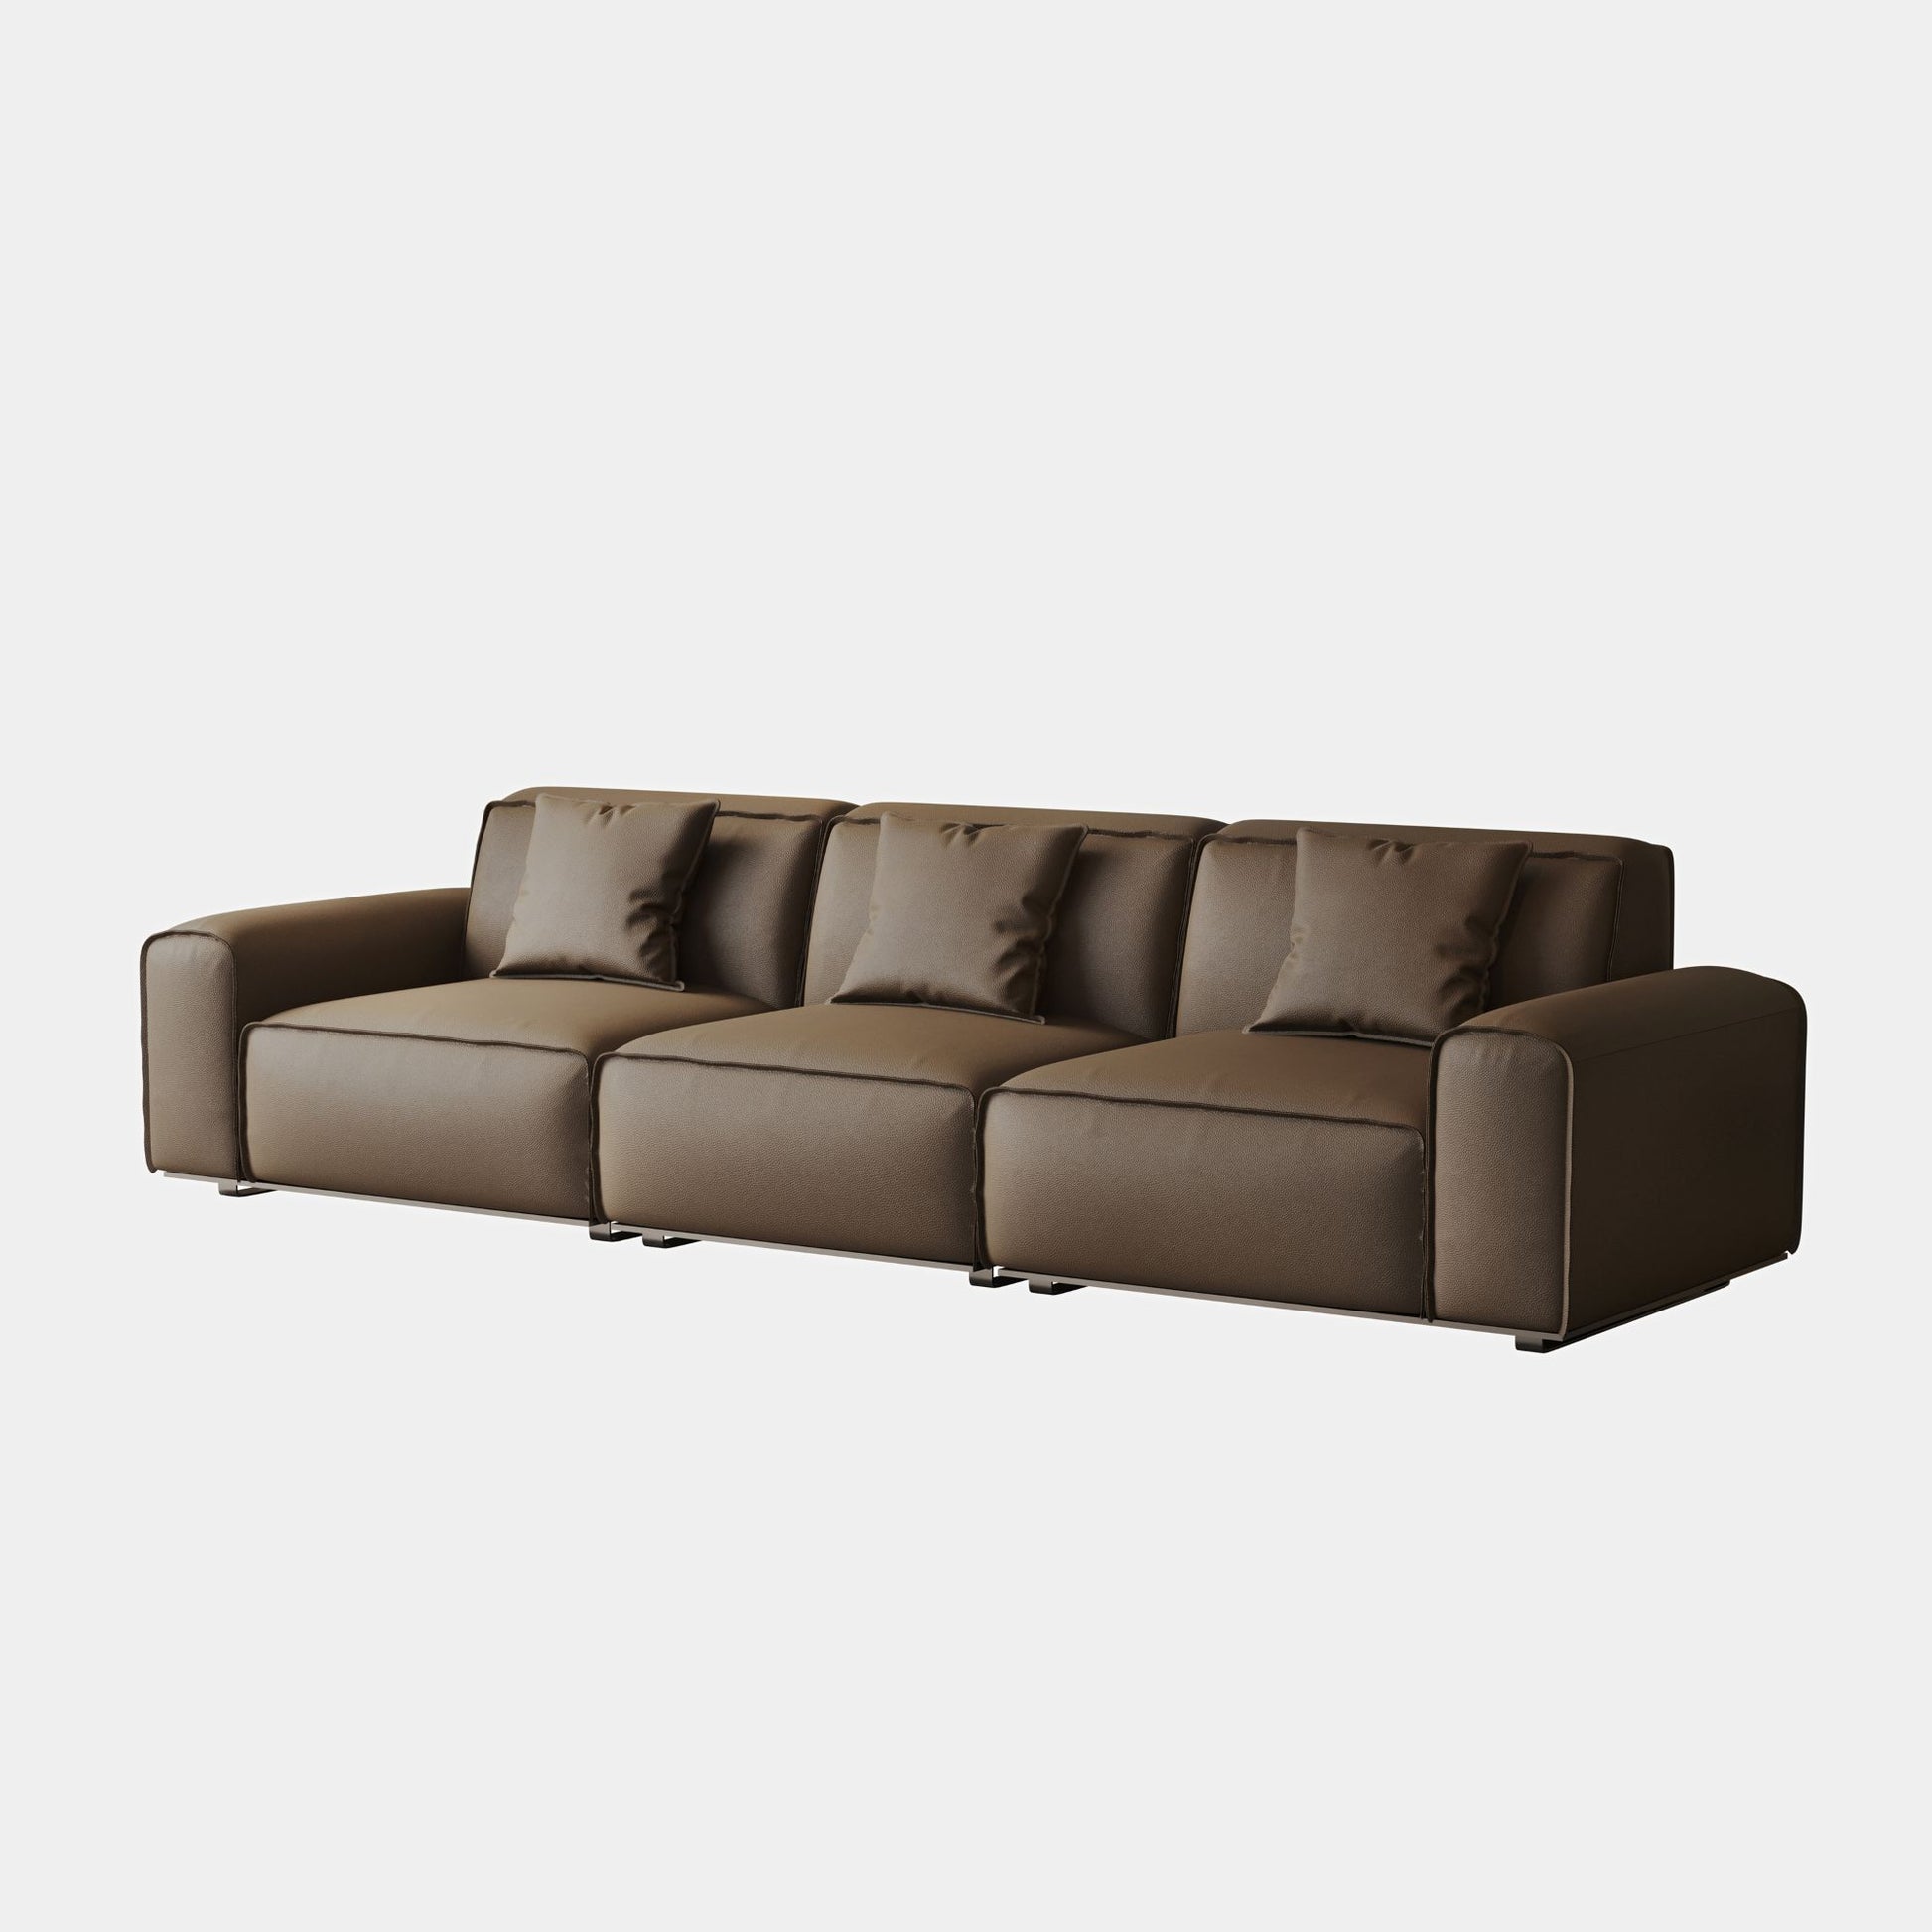 Colby dark brown top grain half leather 3 seat sofa